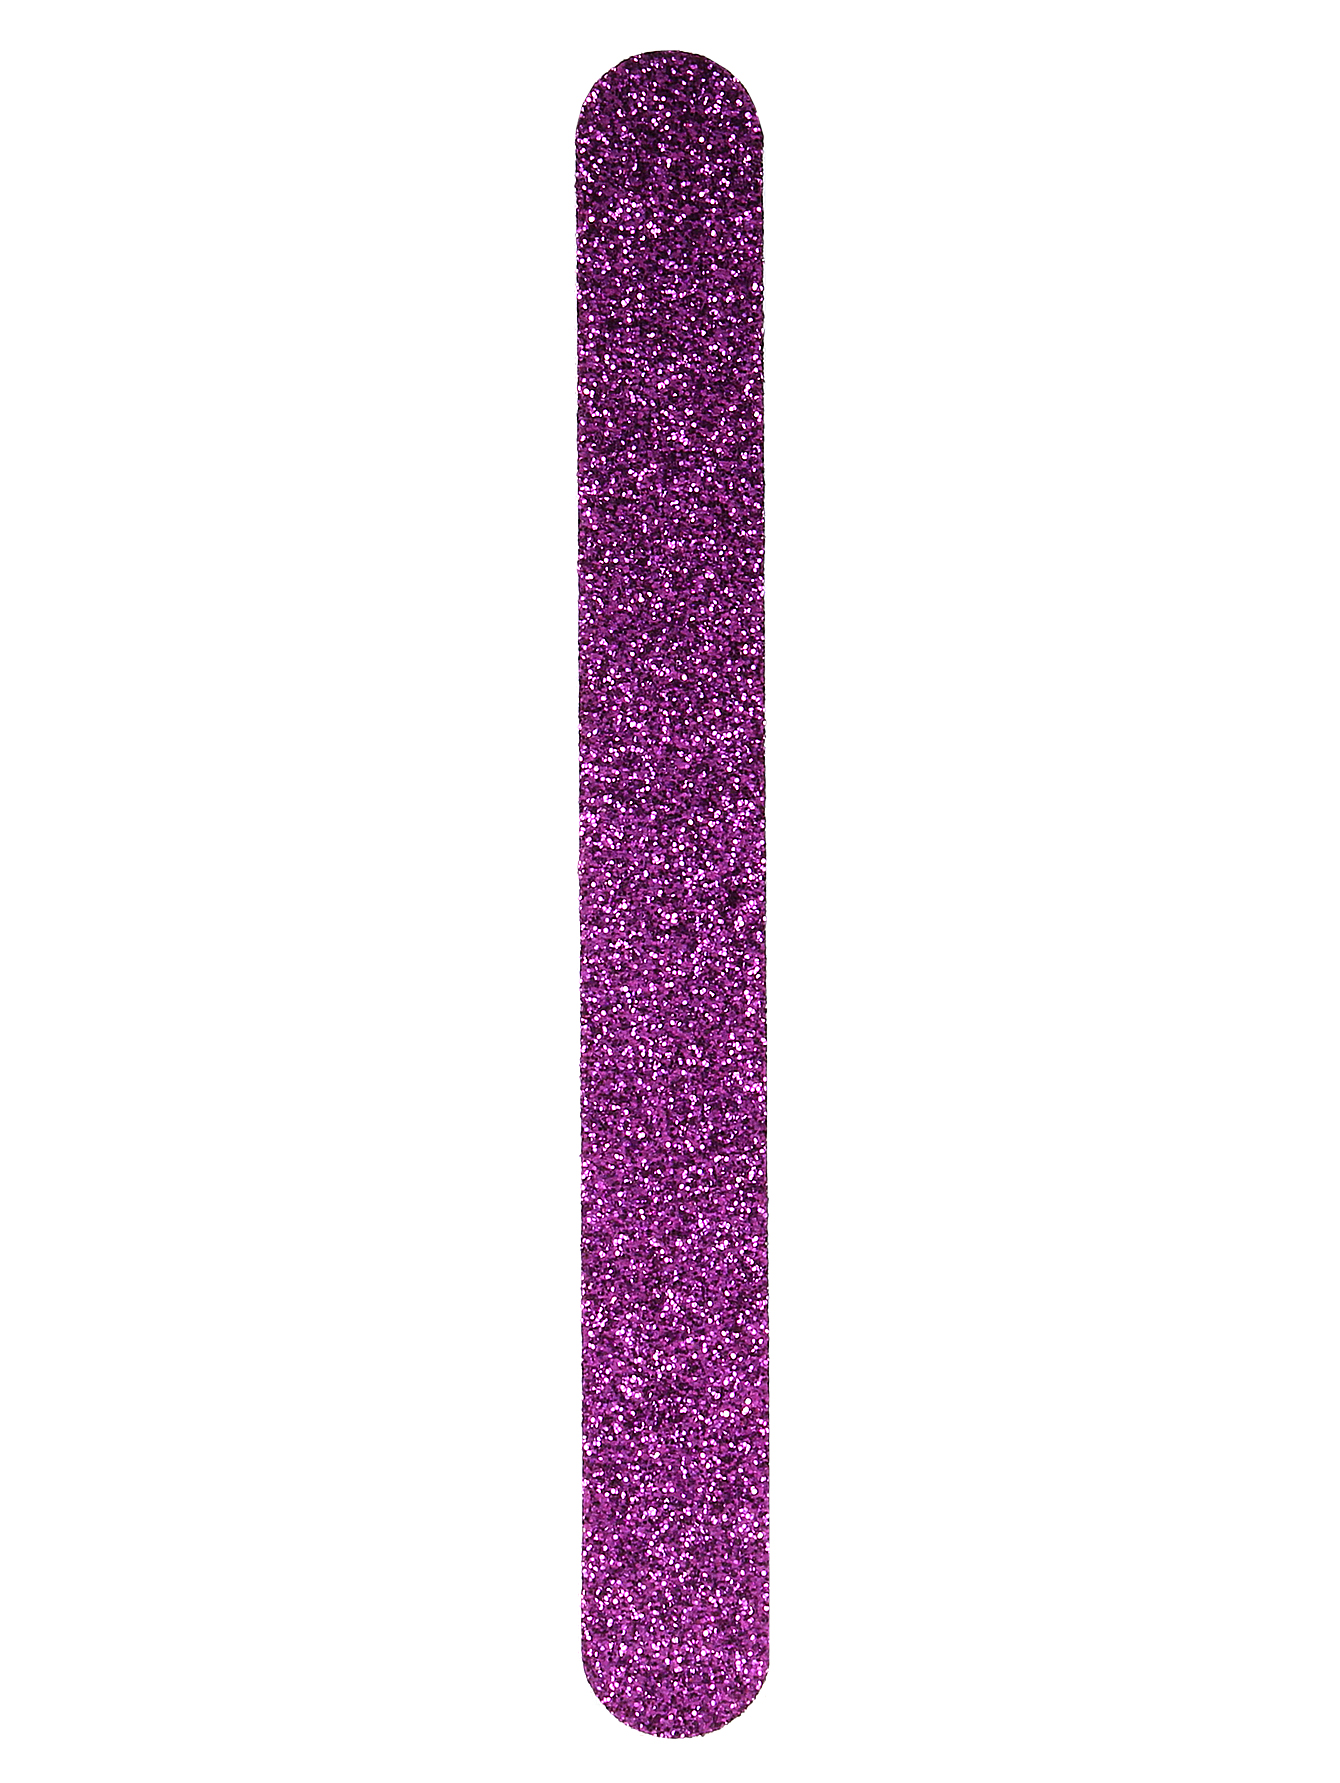  Пилка для ногтей розово-фиолетовая - Nail Care - Общий вид